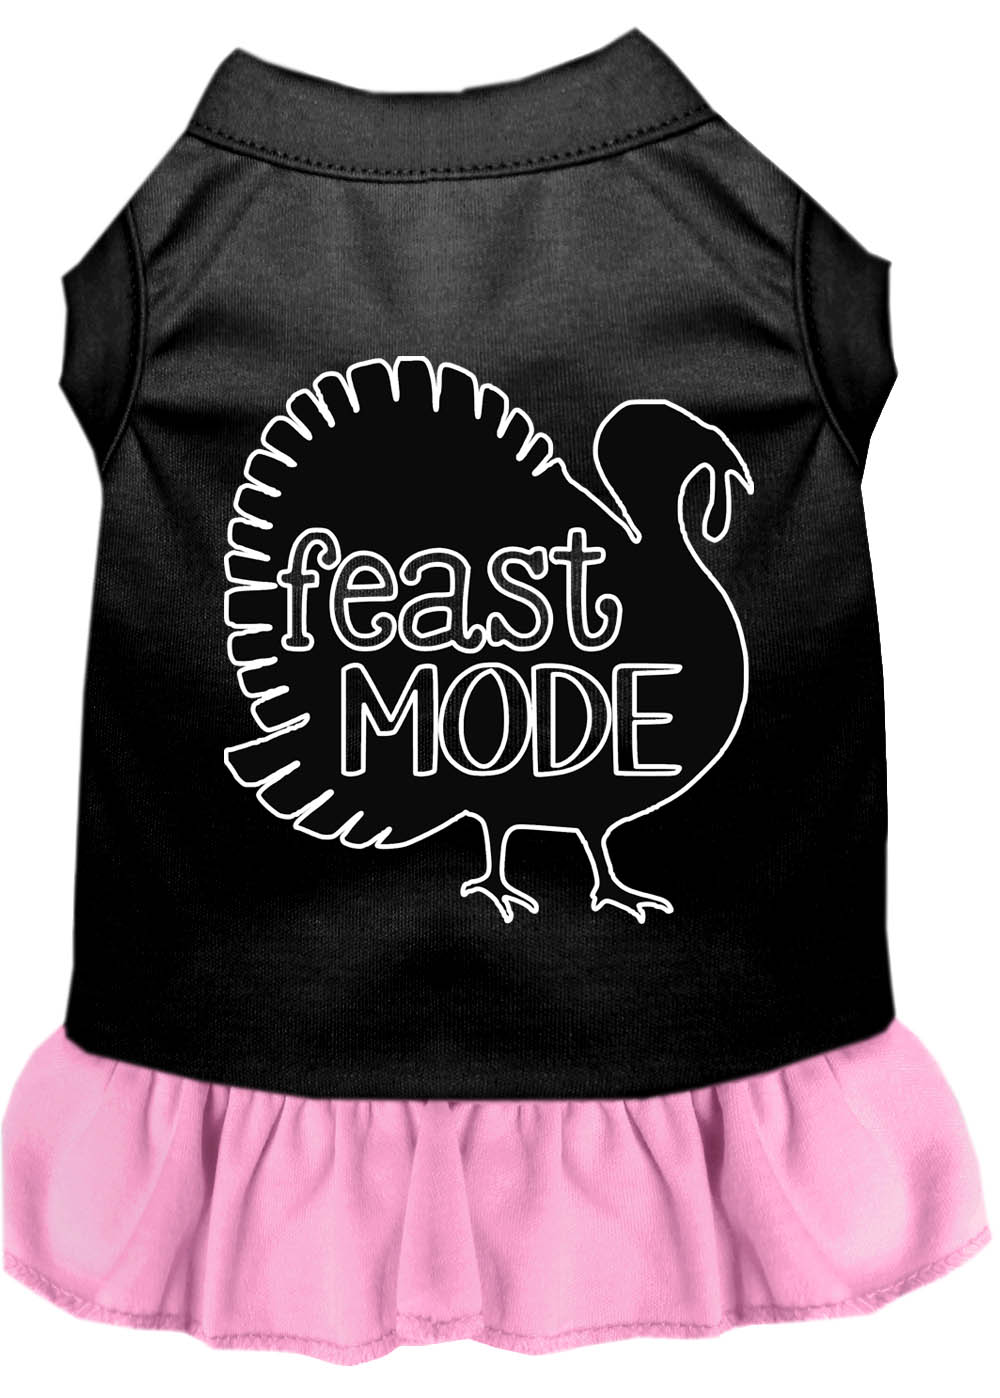 Feast Mode Screen Print Dog Dress Black with Light Pink Sm